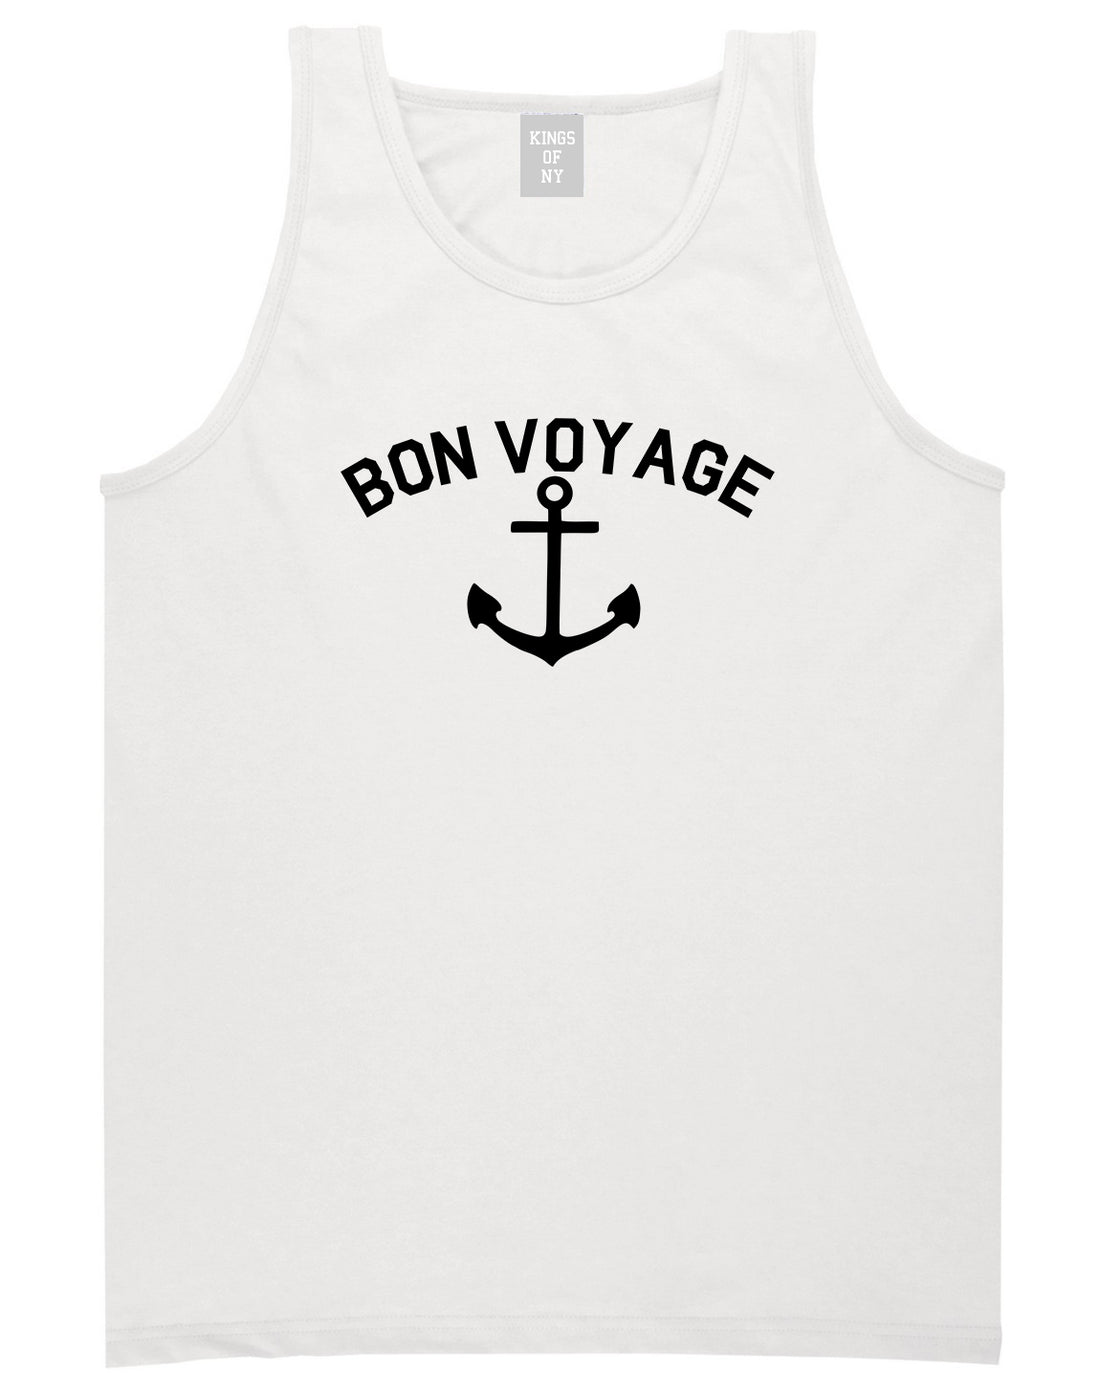 Bon Voyage Anchor Boat Mens Tank Top Shirt White